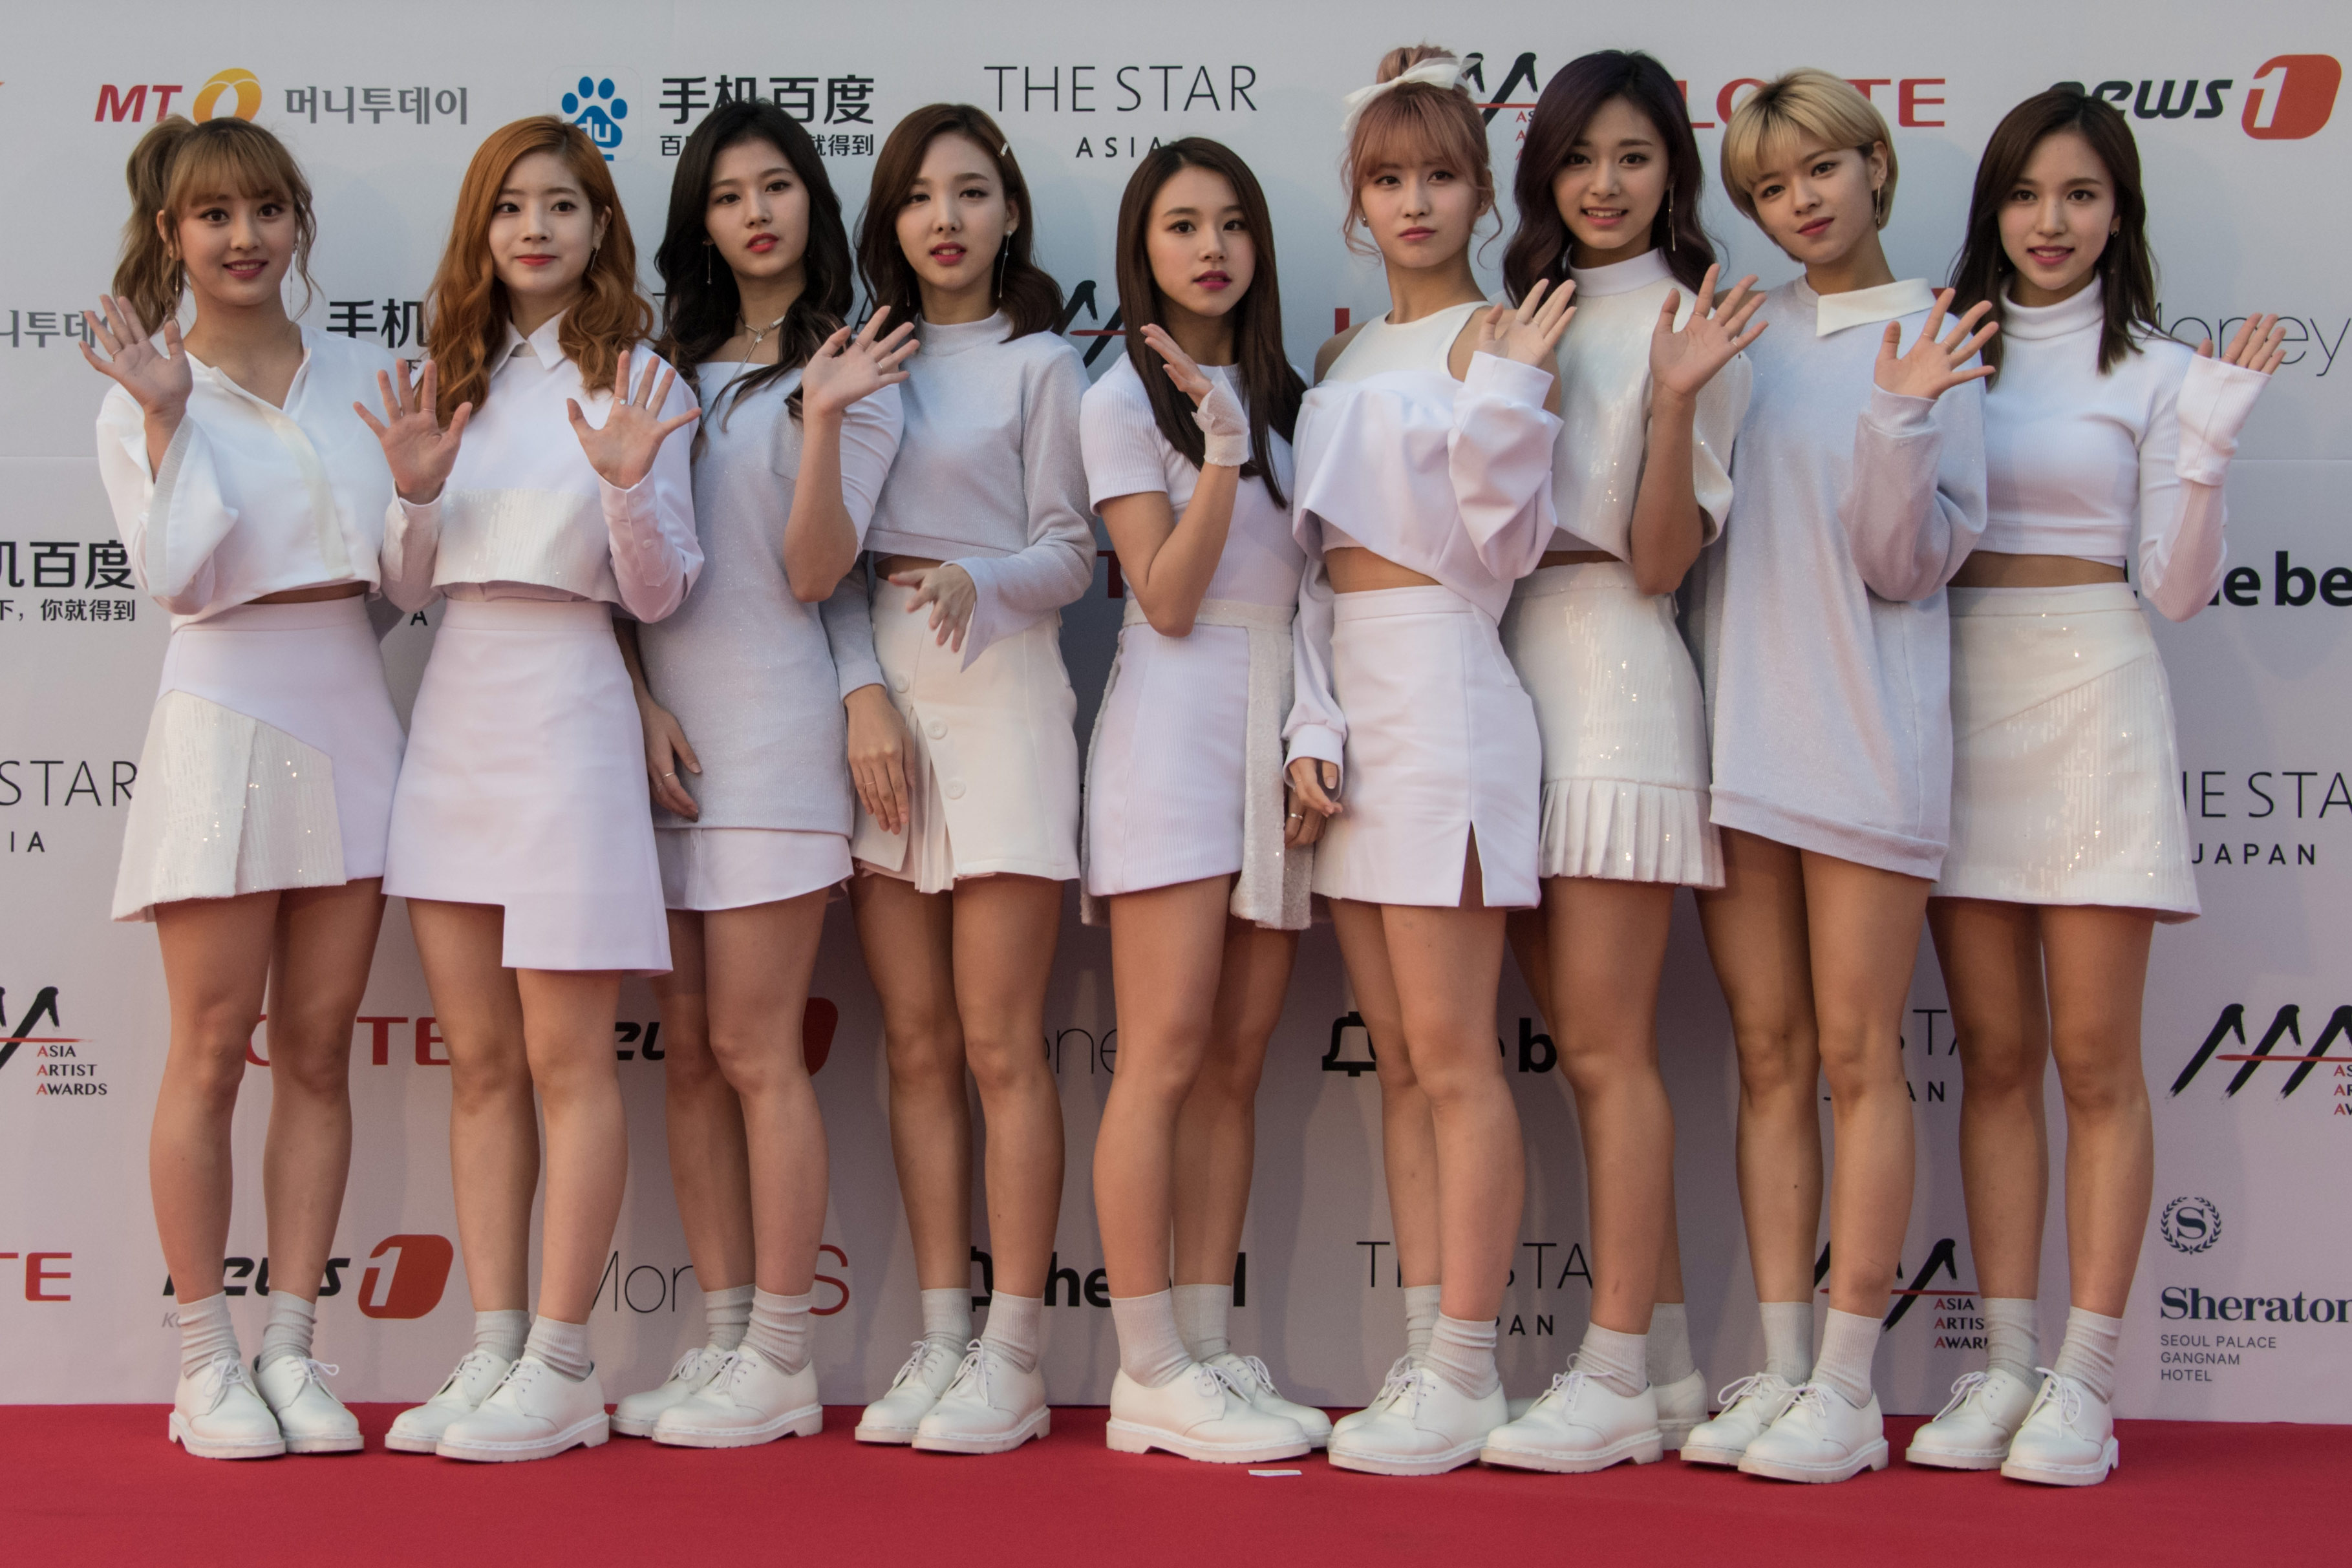 Twice' Girl Group Agency Now Korea's Second-Biggest K-Pop Stock - Bloomberg